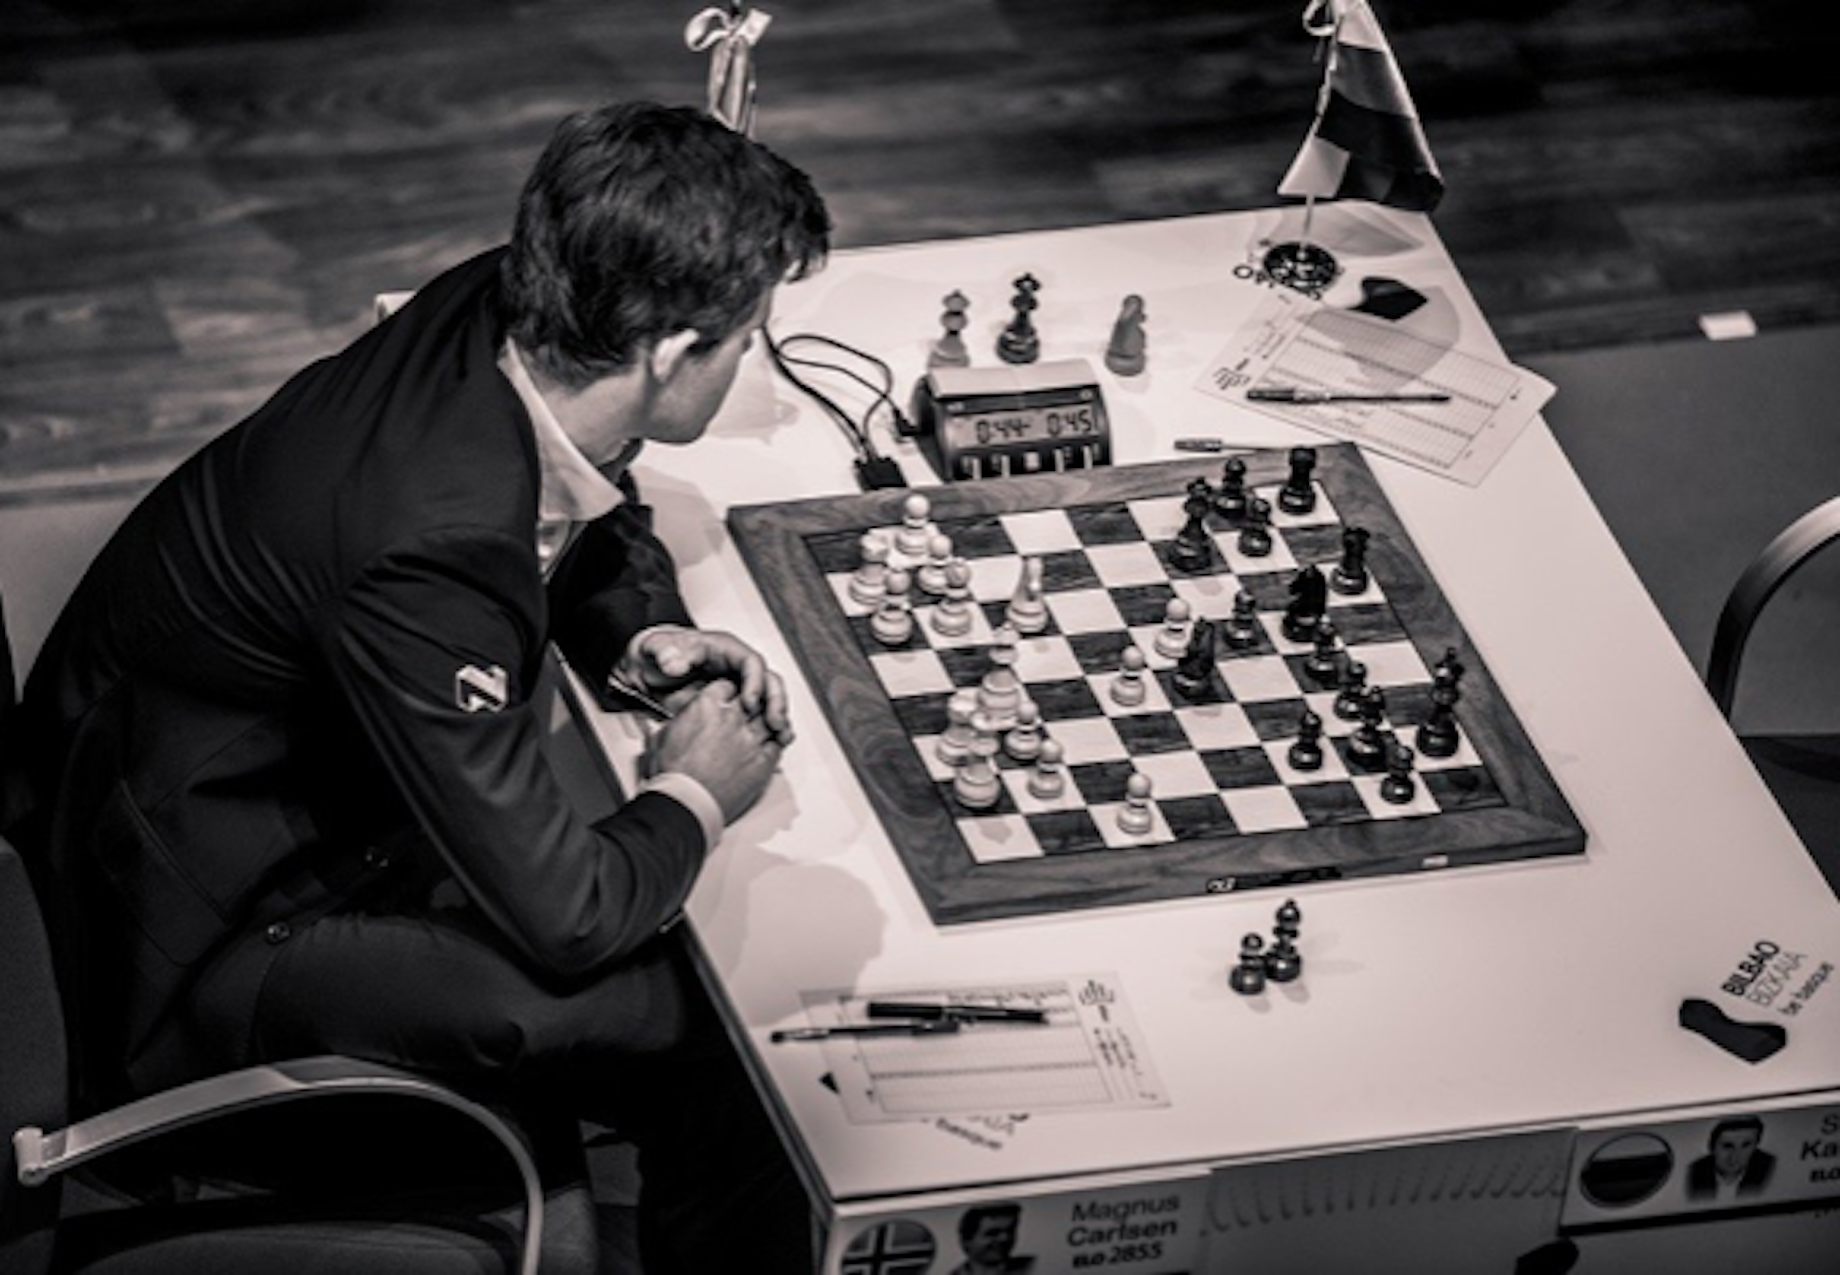 FollowChess on X: The first-ever World Chess Championship began